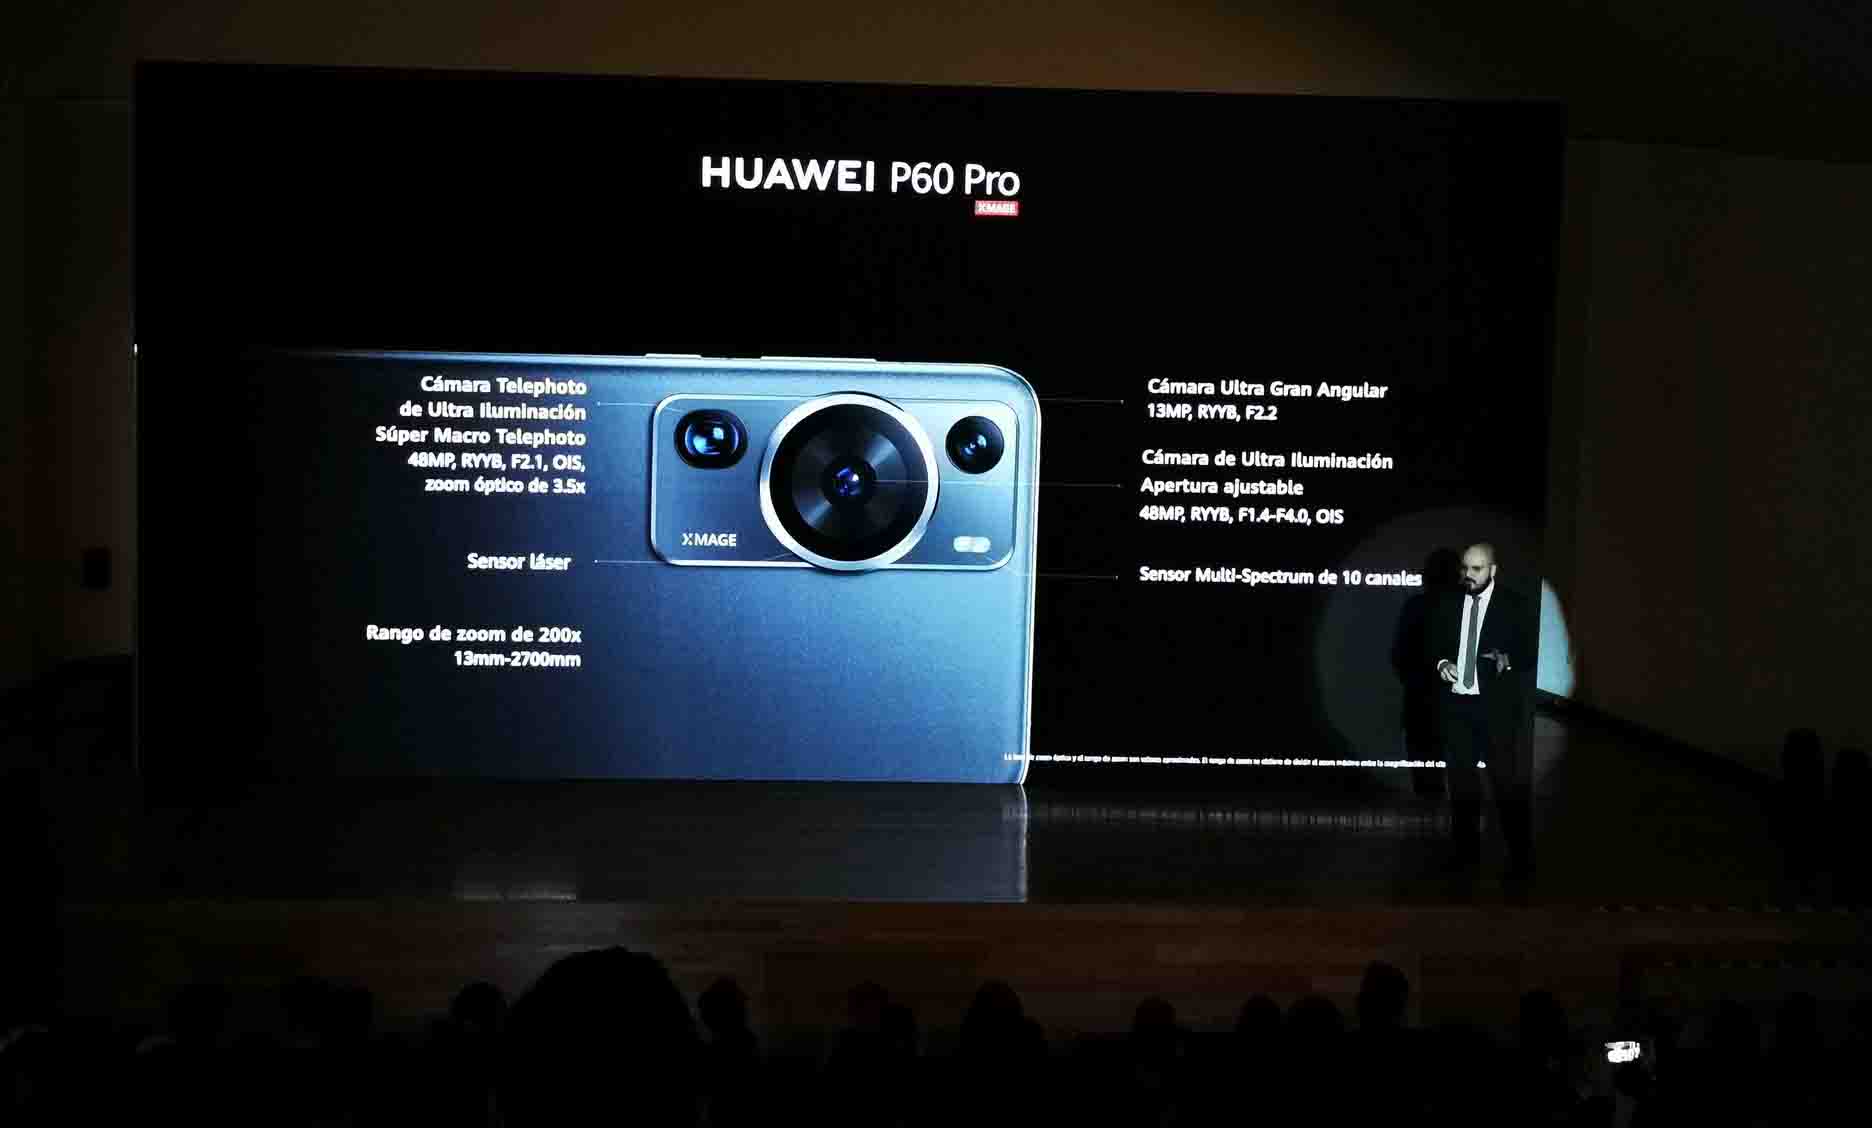 Huawei P60 Pro launch in Latin America